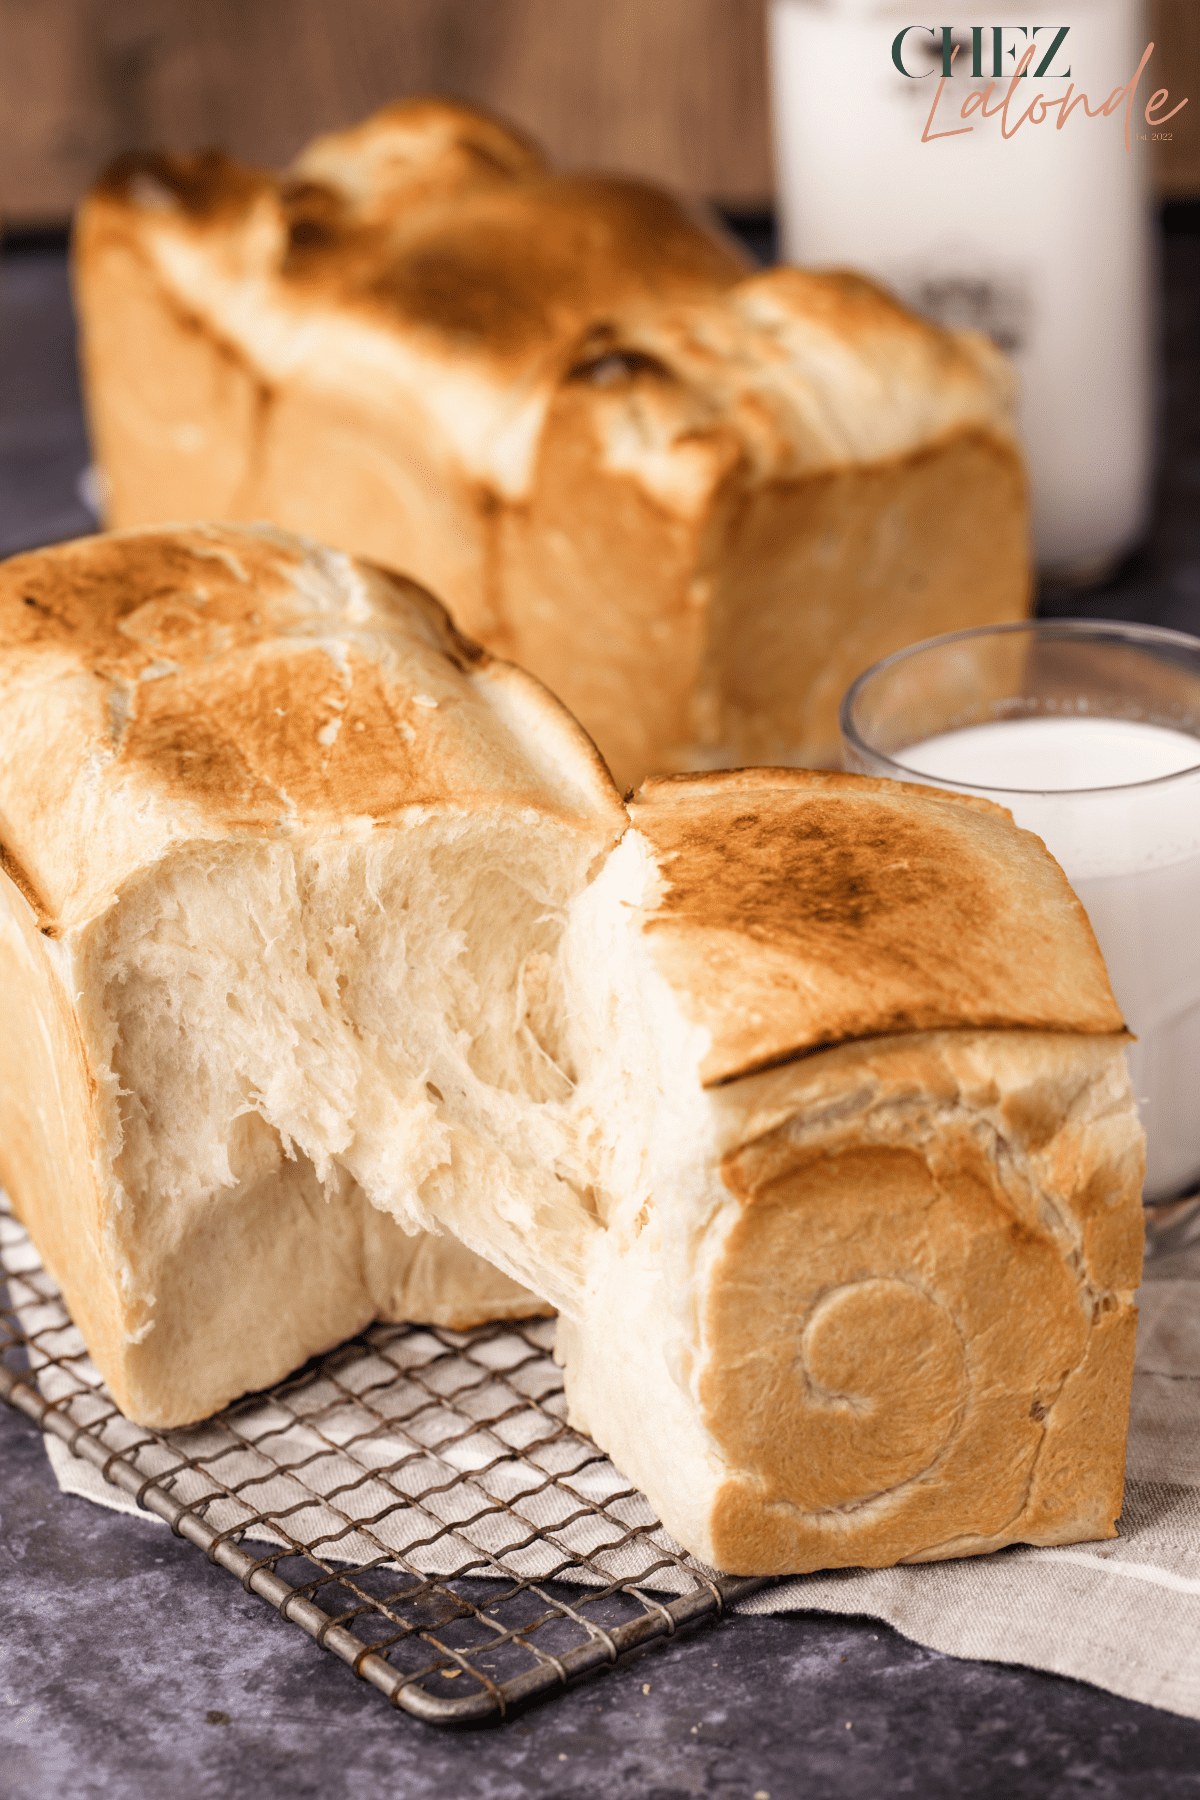 How To Make Japanese Milk Bread using the Tangzhong Method